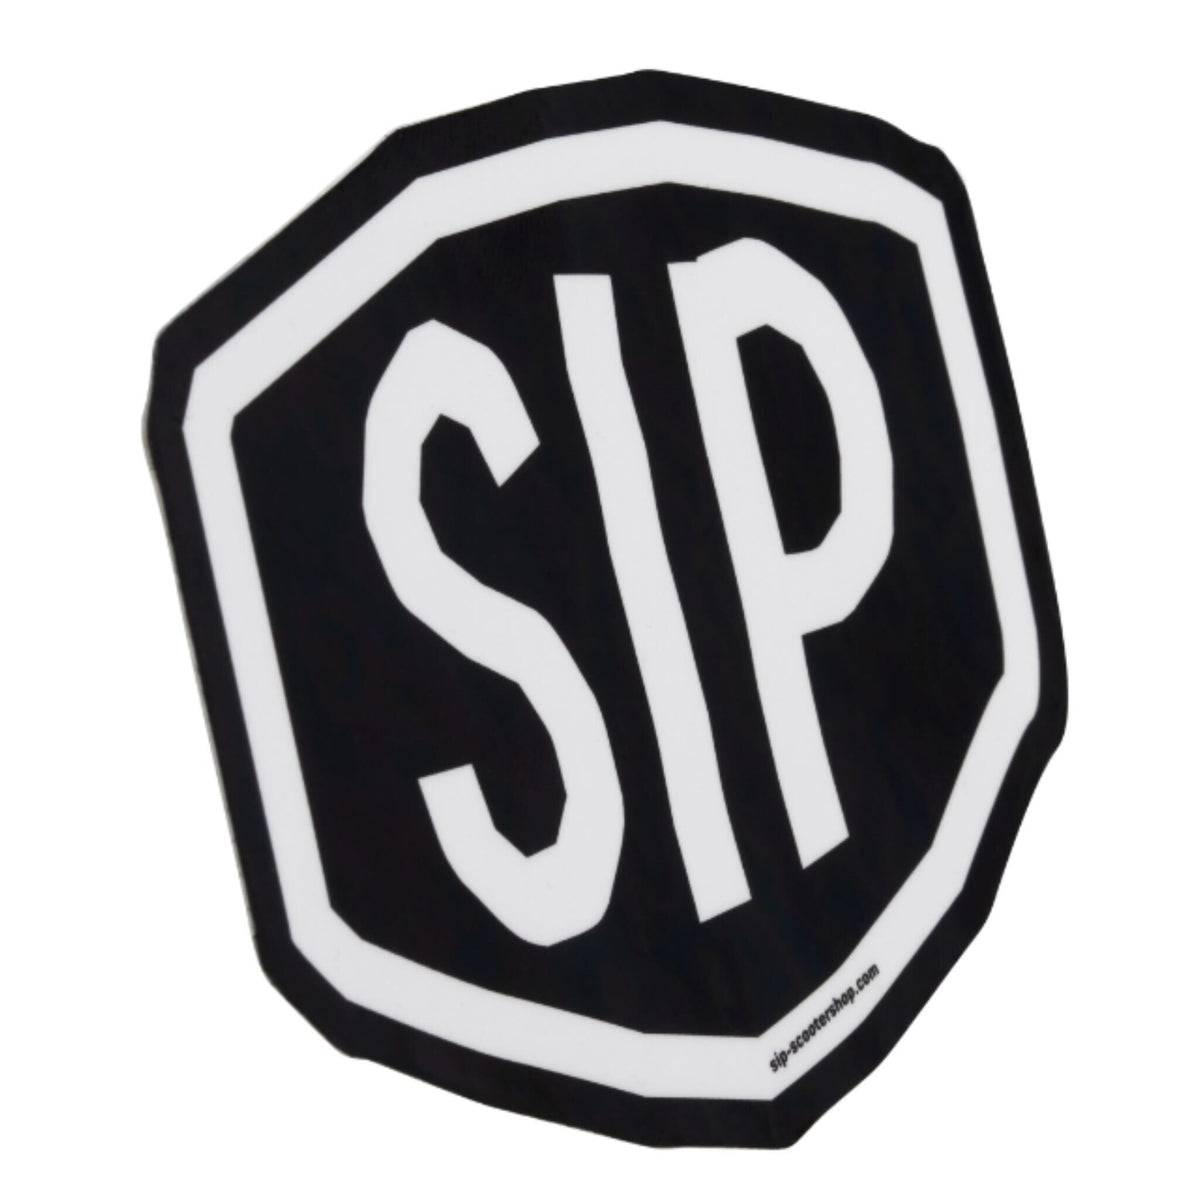 SIP Tape Logo Sticker - 70mm x 55mm - Black